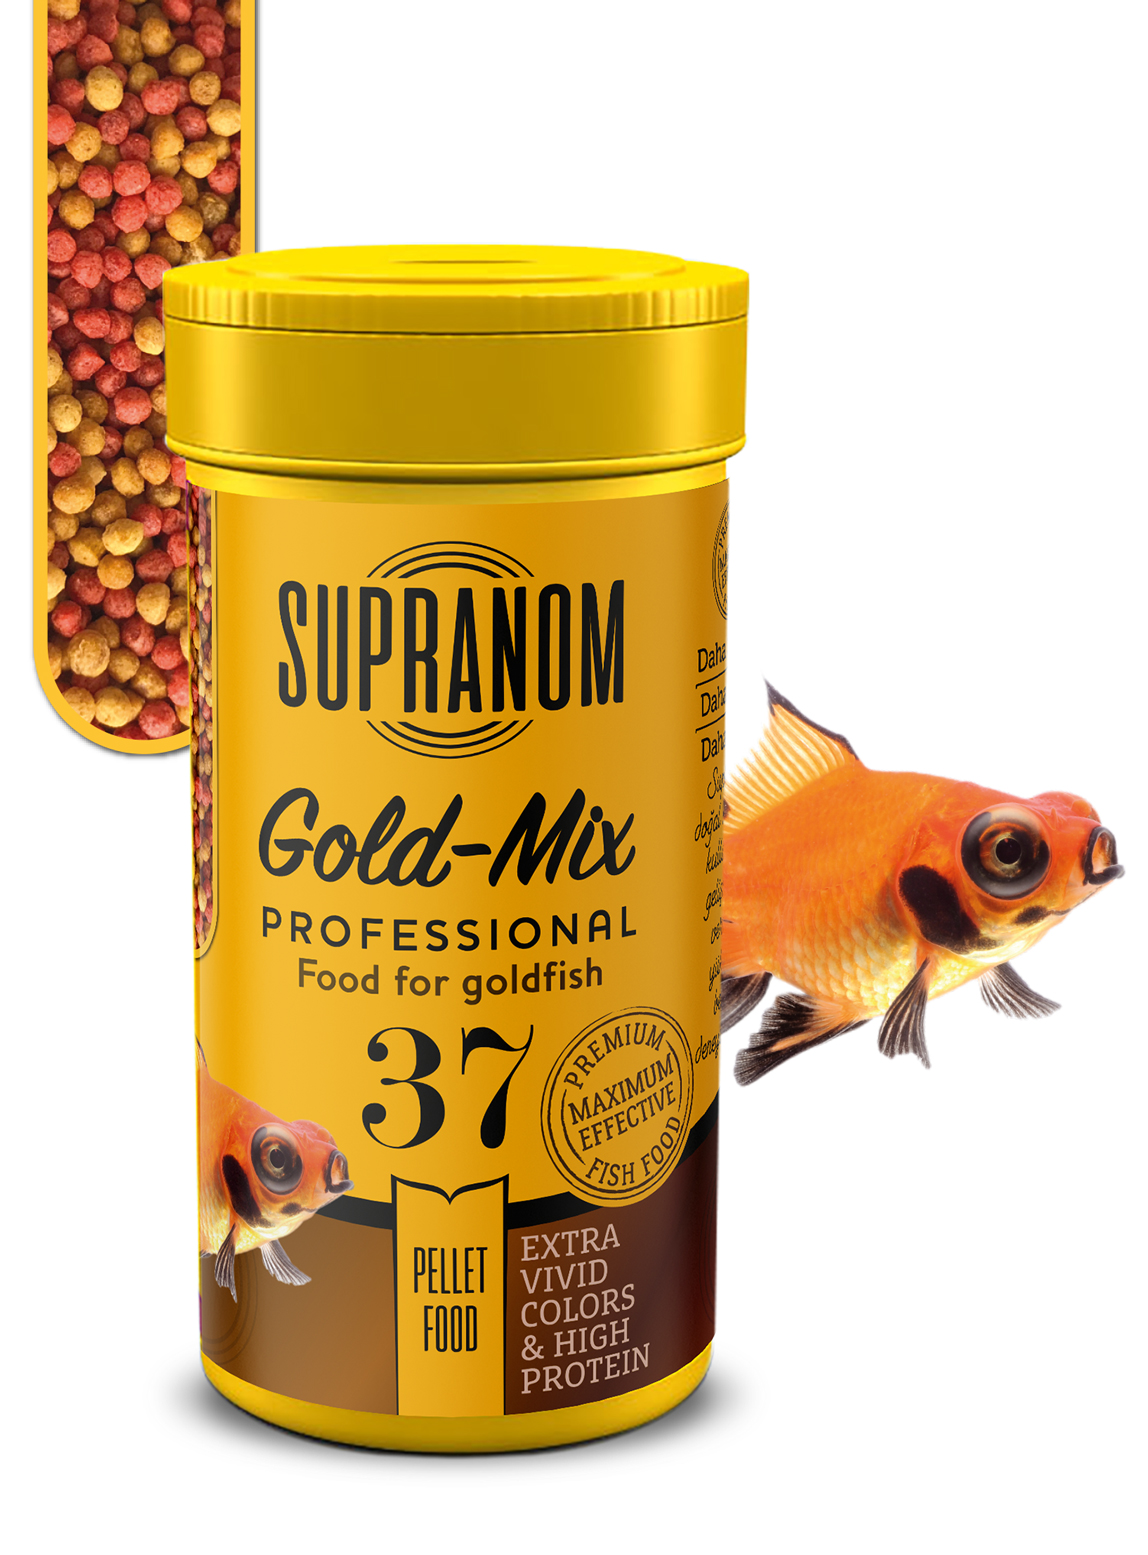 Supranom japon balık yemi gold-mix pellet food 100ml (37)-1